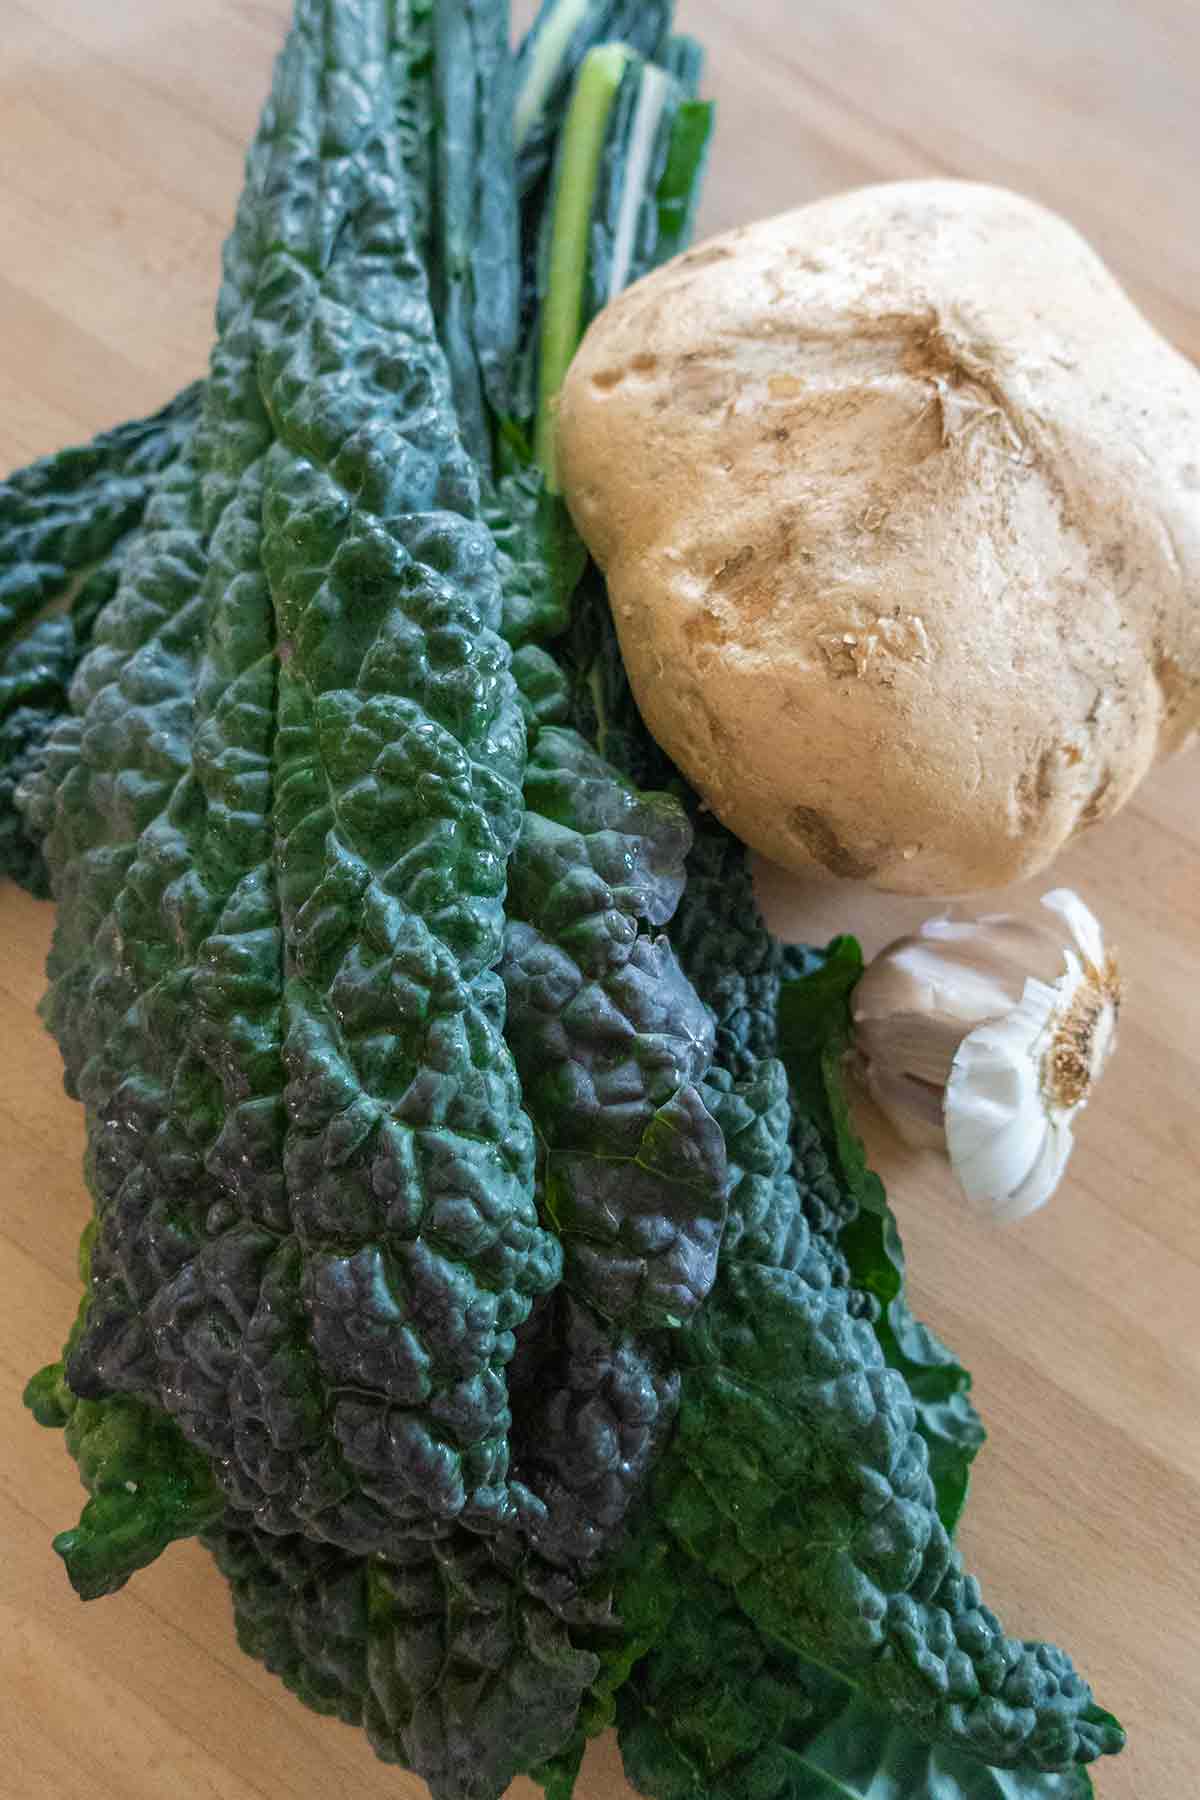 tuscan kale, jicama and garlic on a cutting board